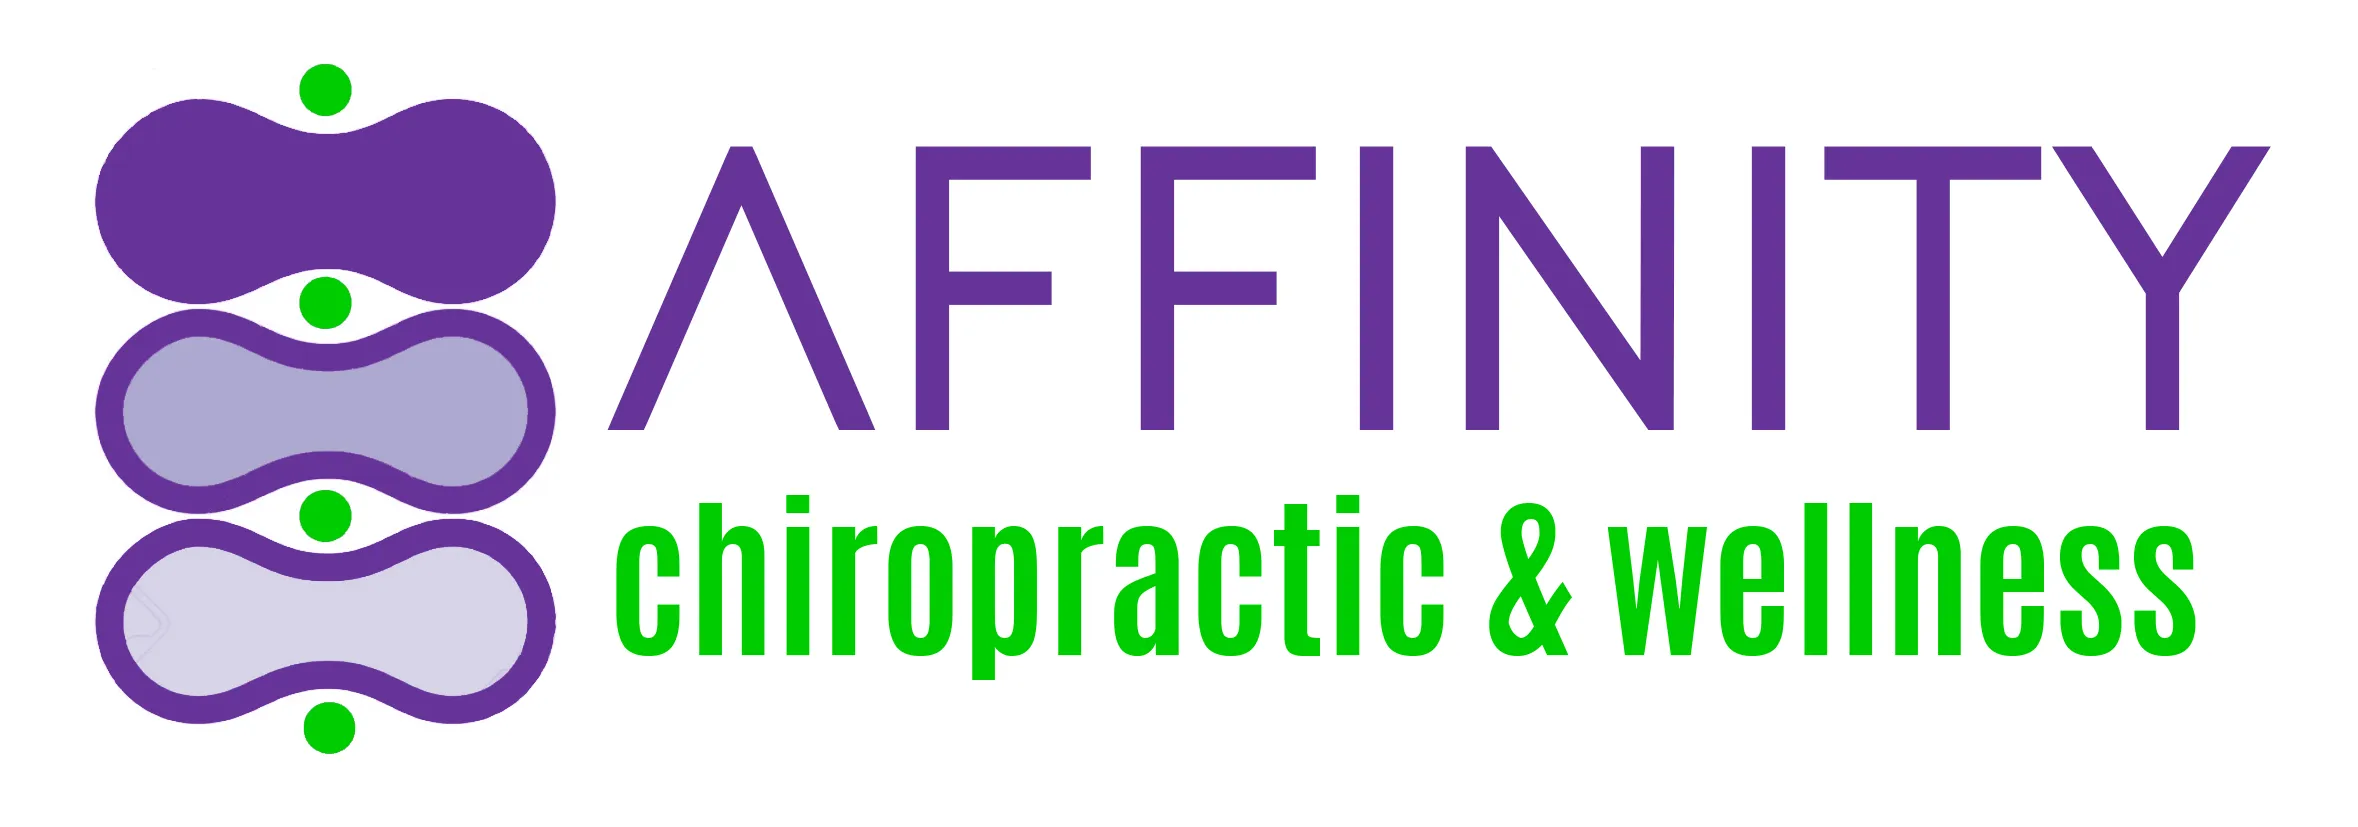 Affinity Chiropractic & Wellness